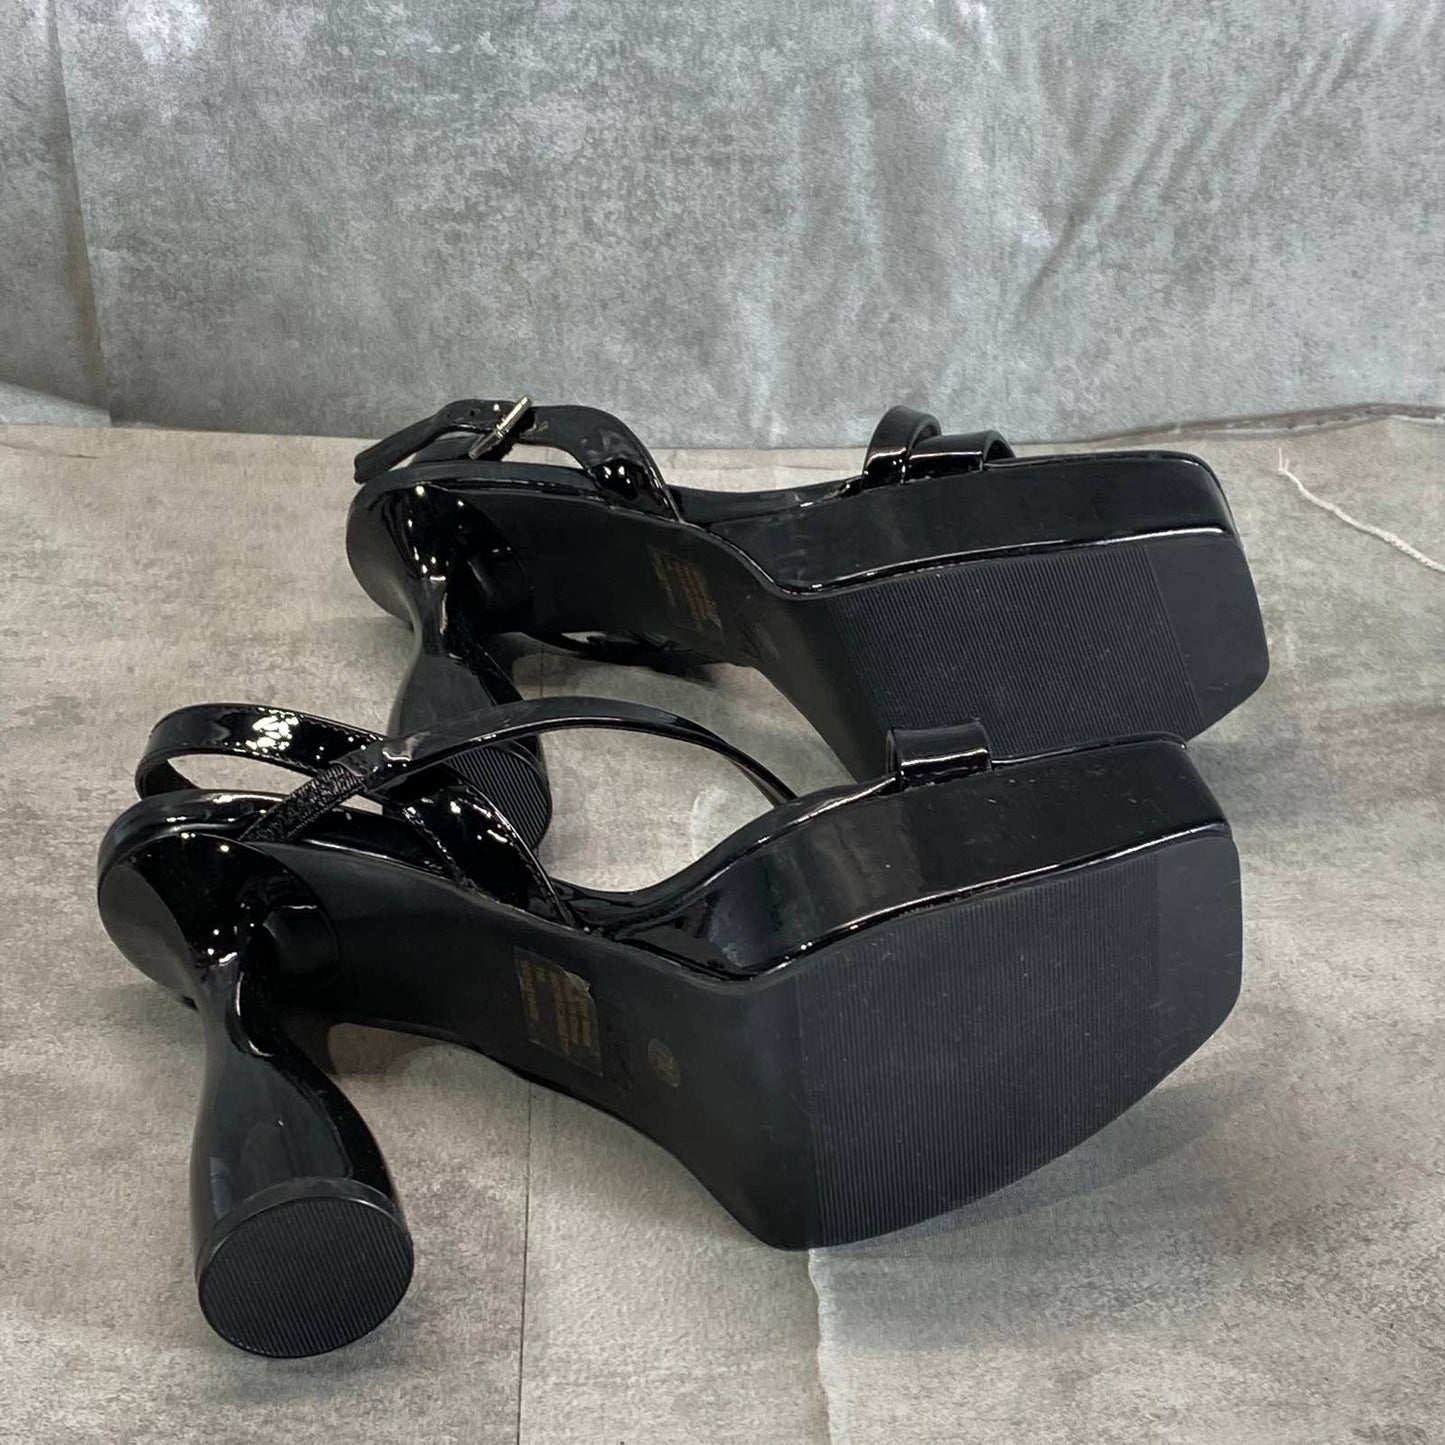 BAR III Women's Black Patent Scarlett Square-Toe Platform Heels SZ 7